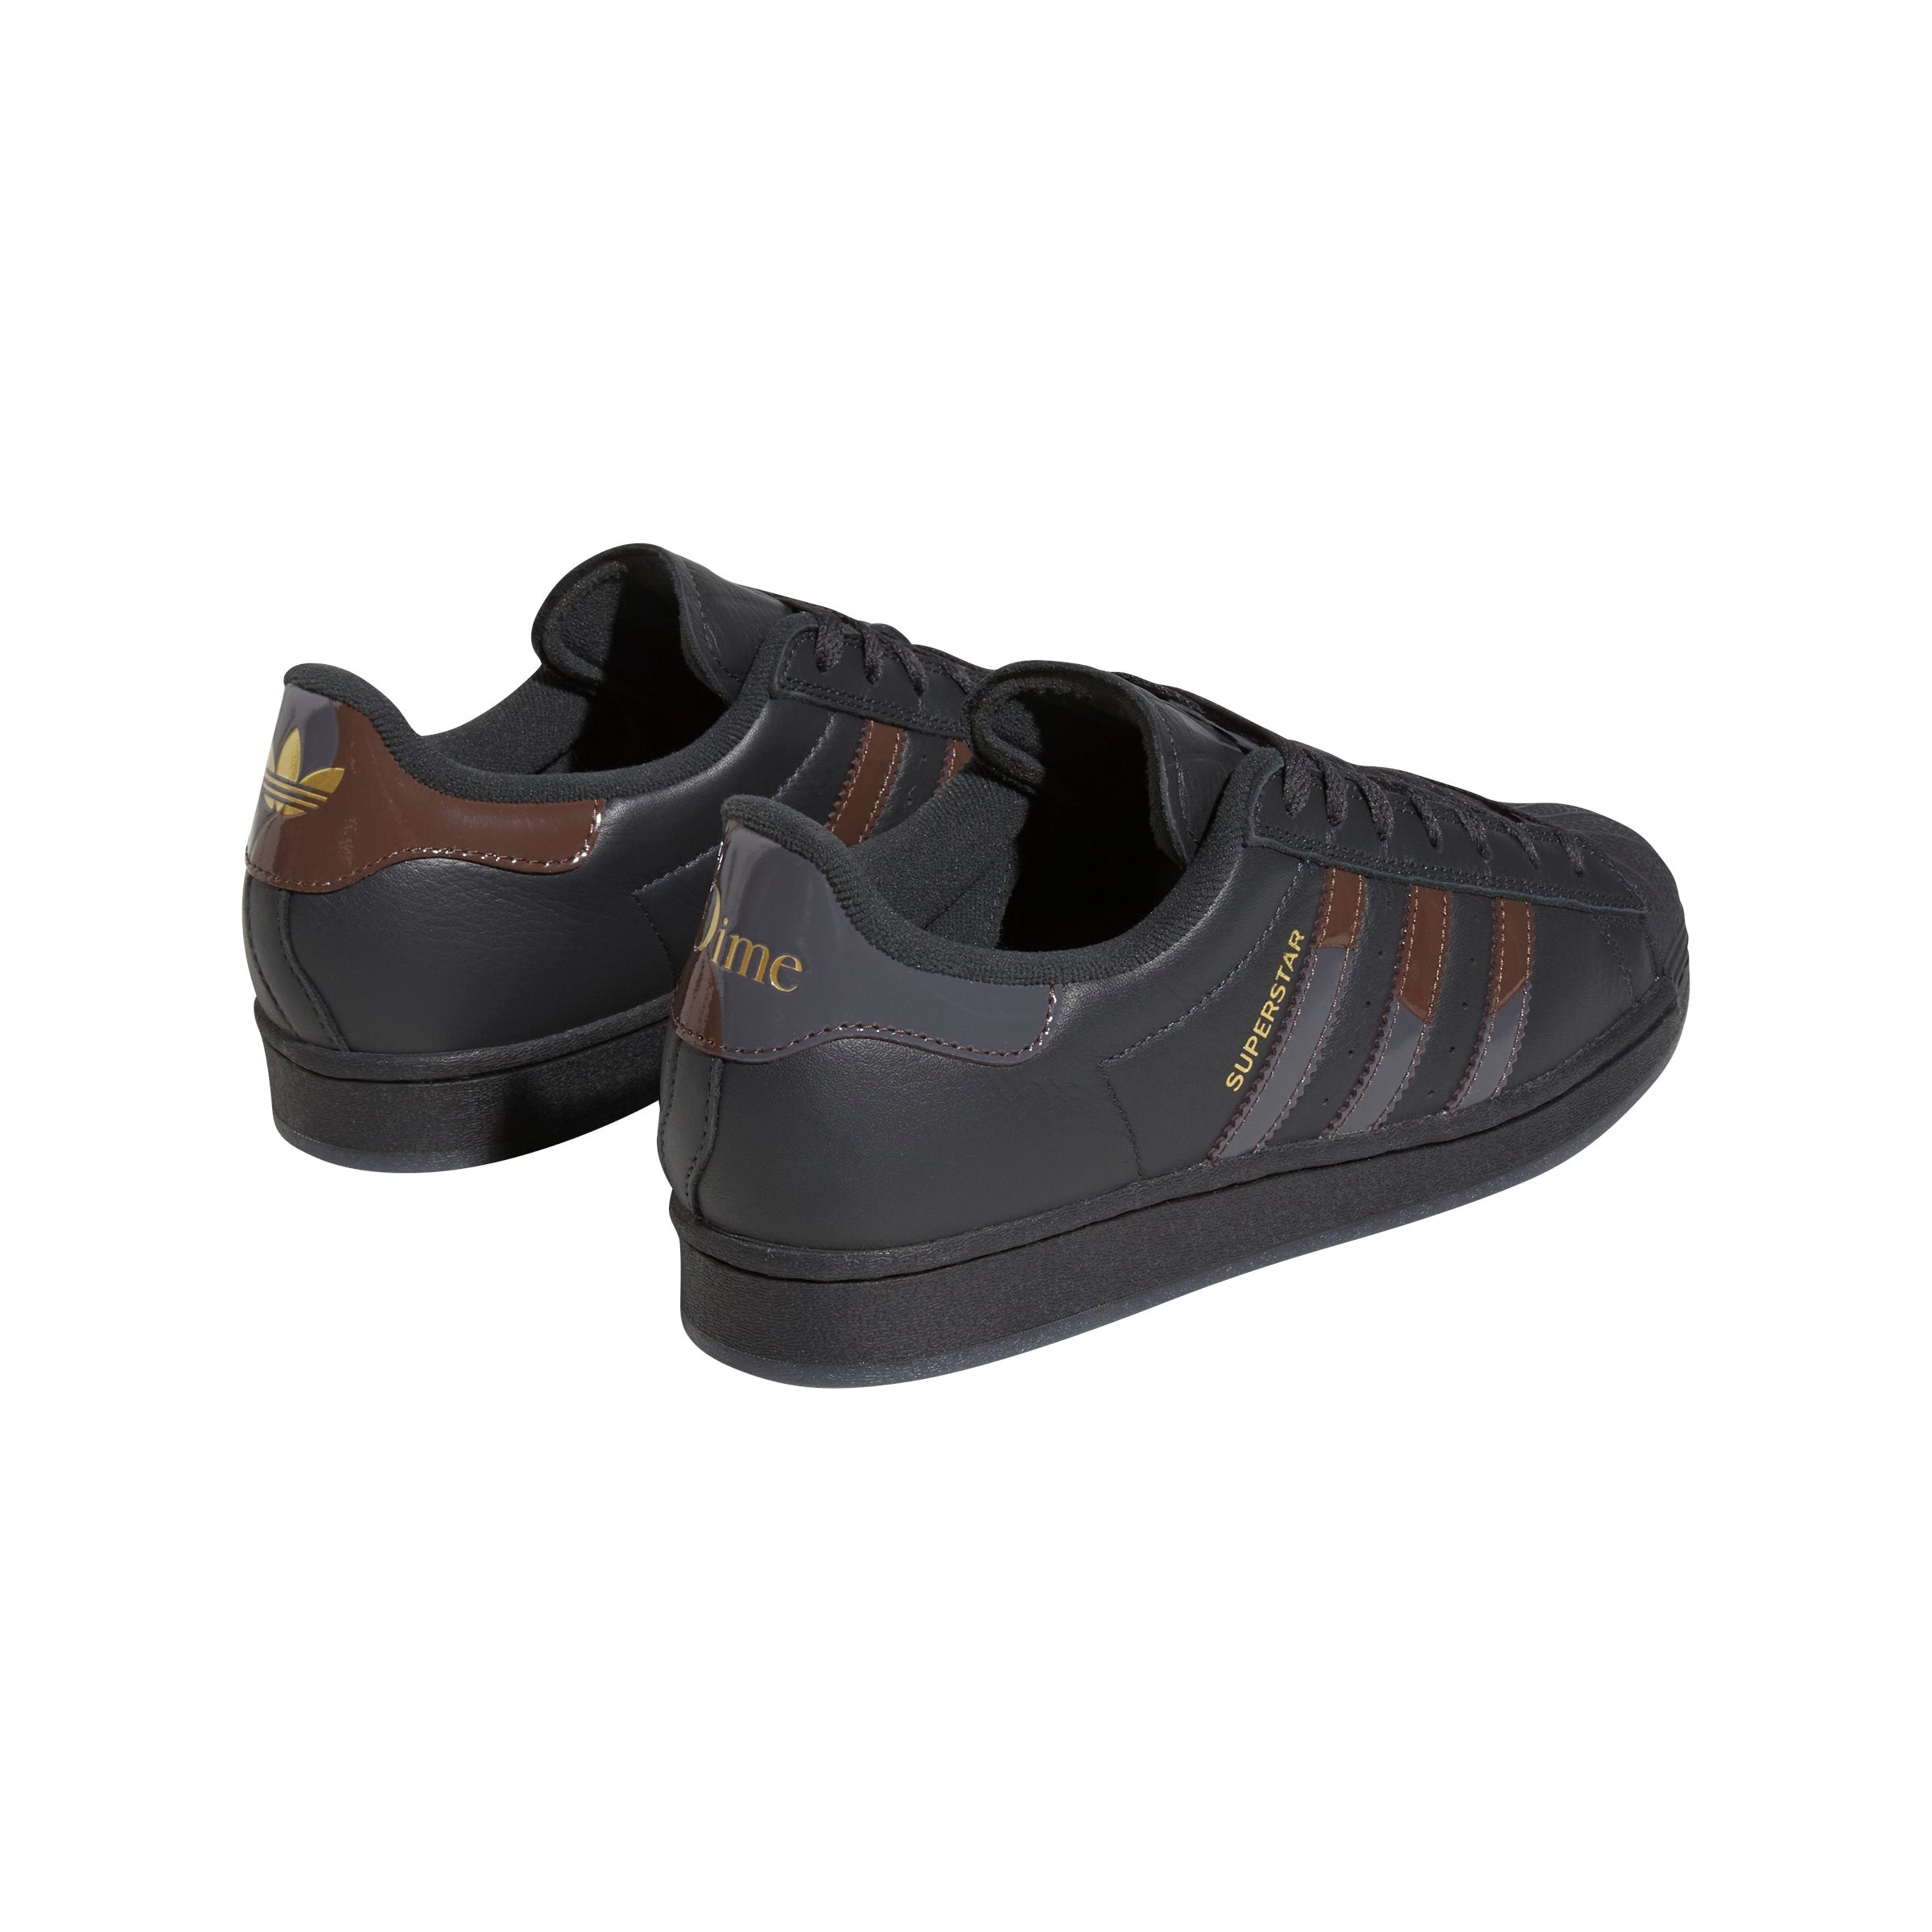 Adidas x Dime Superstar ADV Skateschuhe Sneaker adidas Skateboarding 